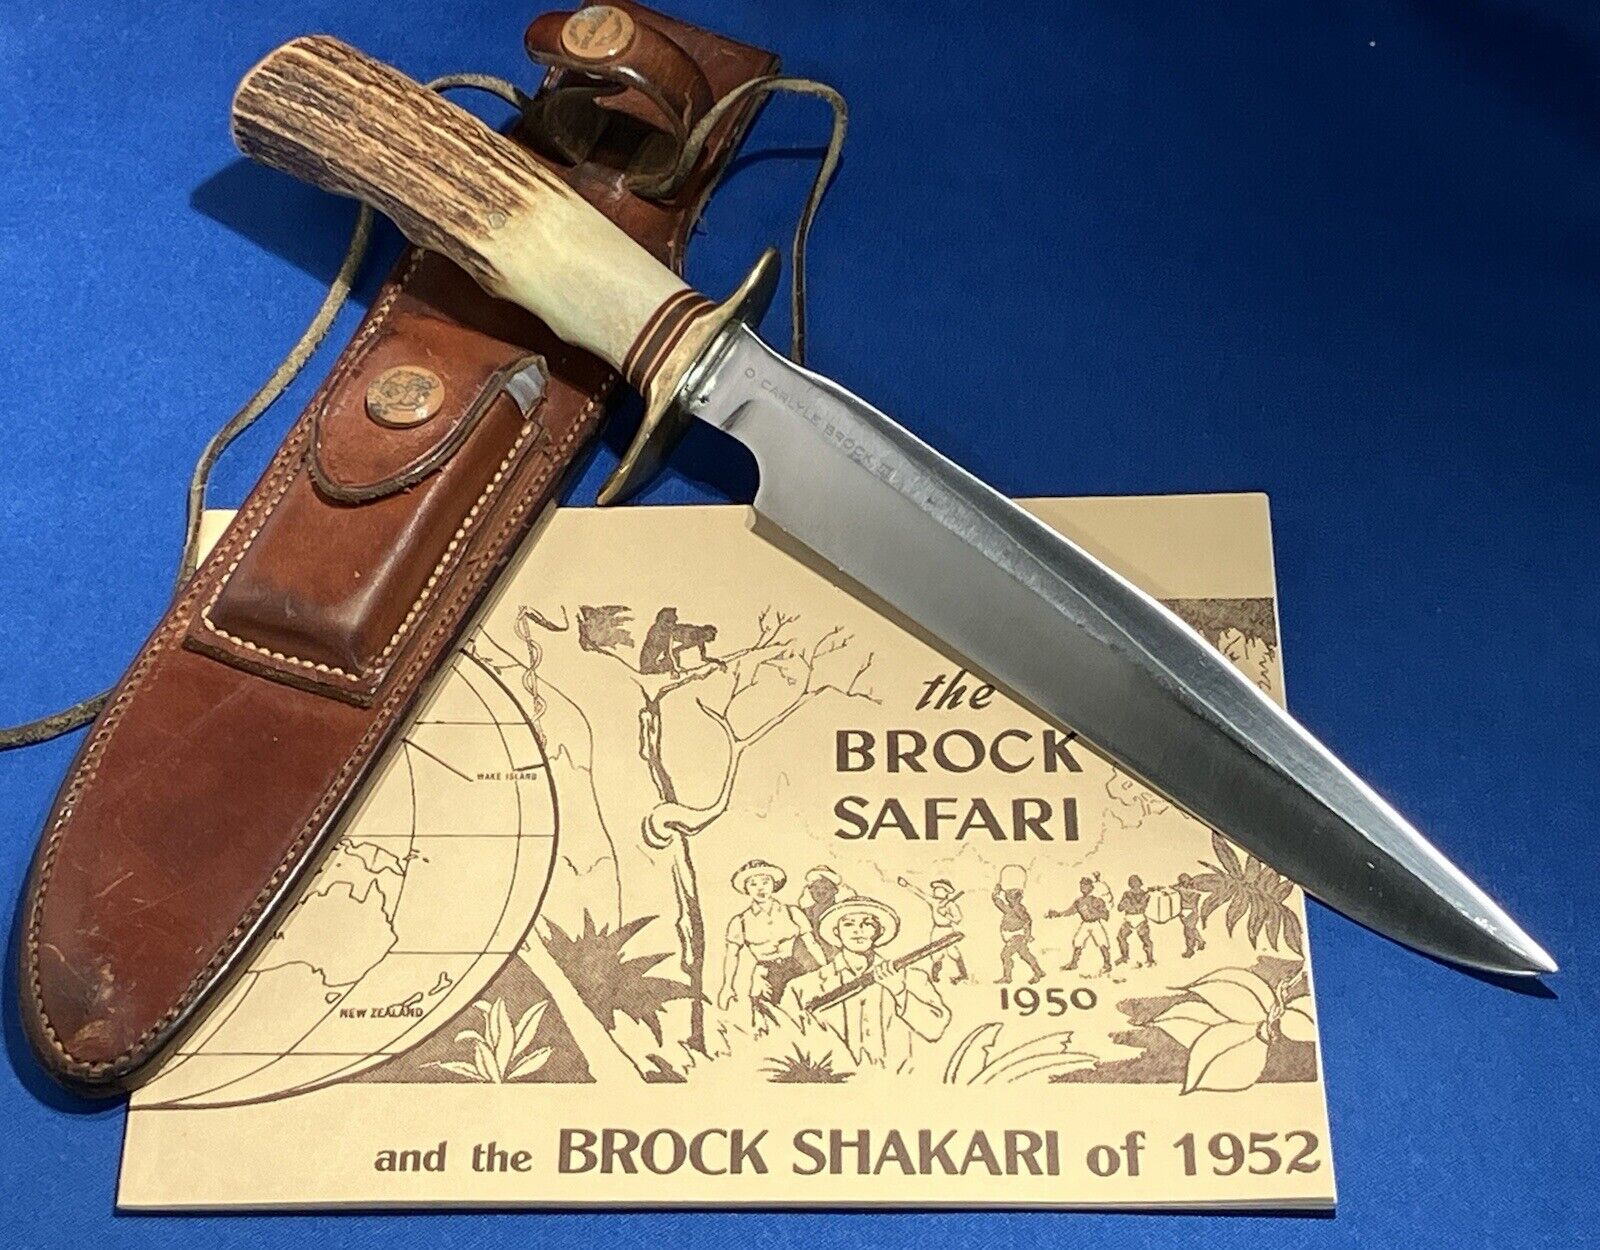 RANDALL MADE KNIFE NO. 1-8” ONE PIN STAG HEISER BROWN BUTTON SHEATH BROCK SAFARI